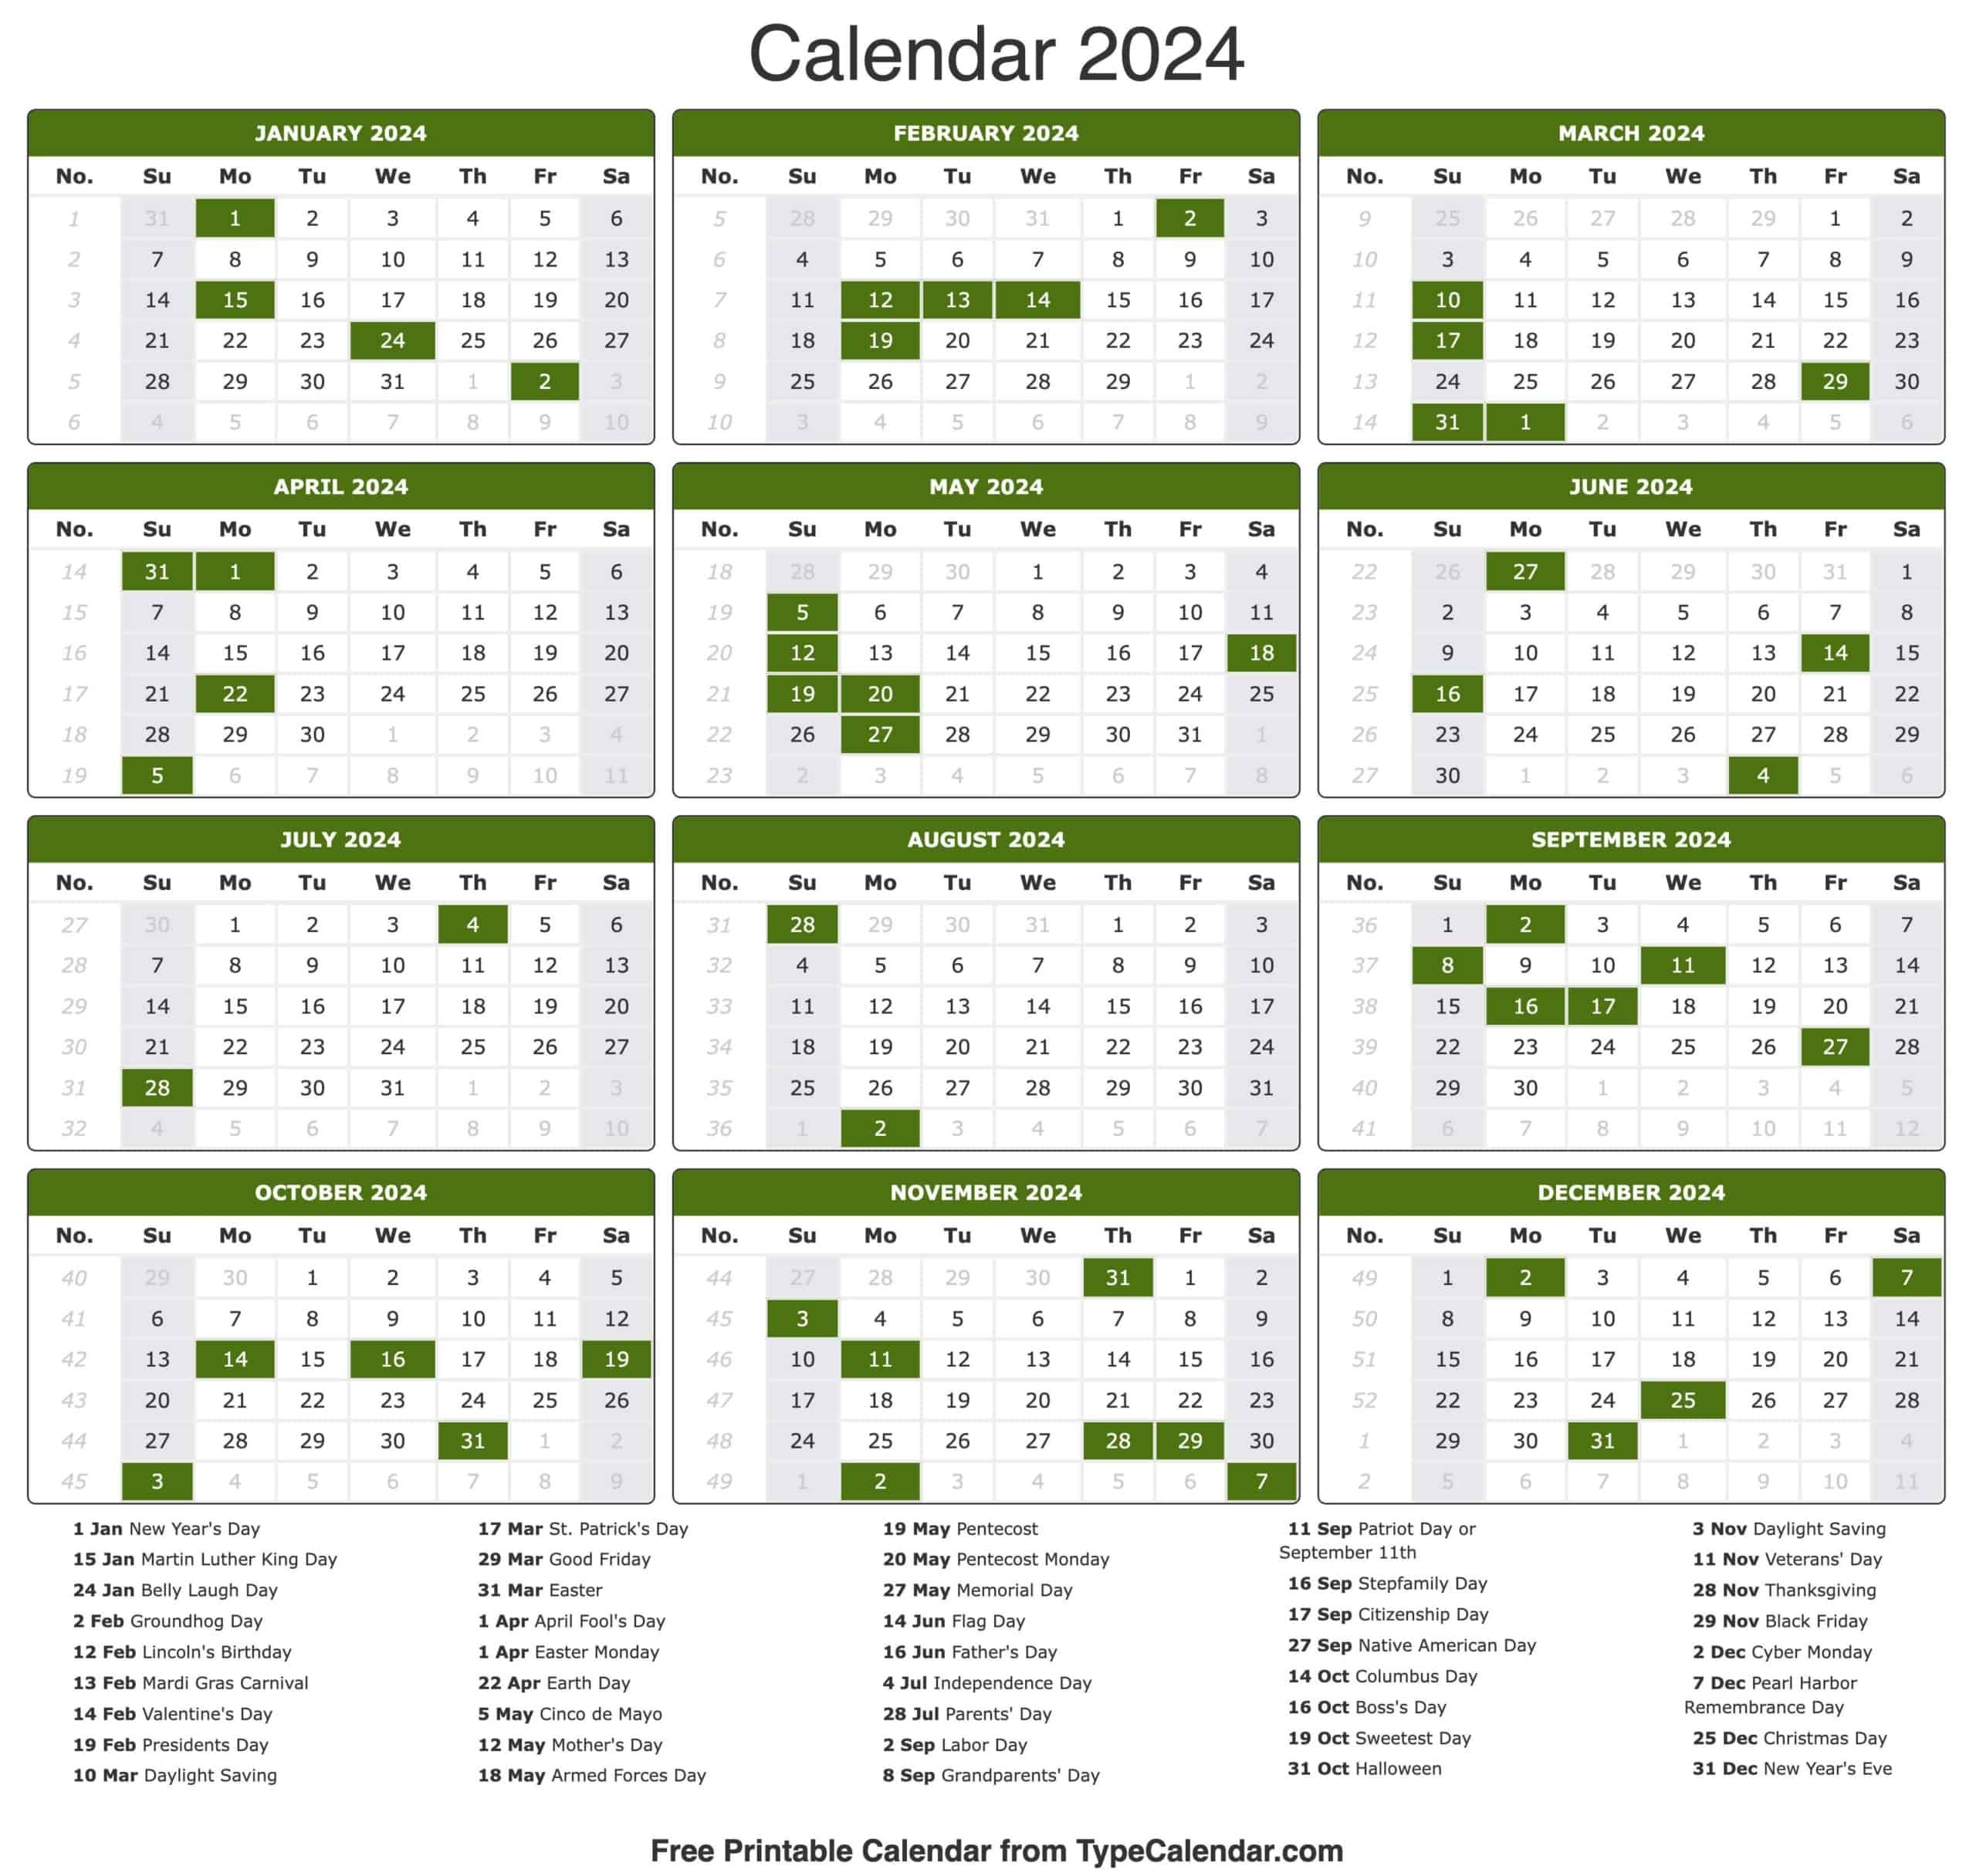 2024 Calendar: Free Printable Calendar With Holidays in Free Printable Calendar 2024 Weekdays Only